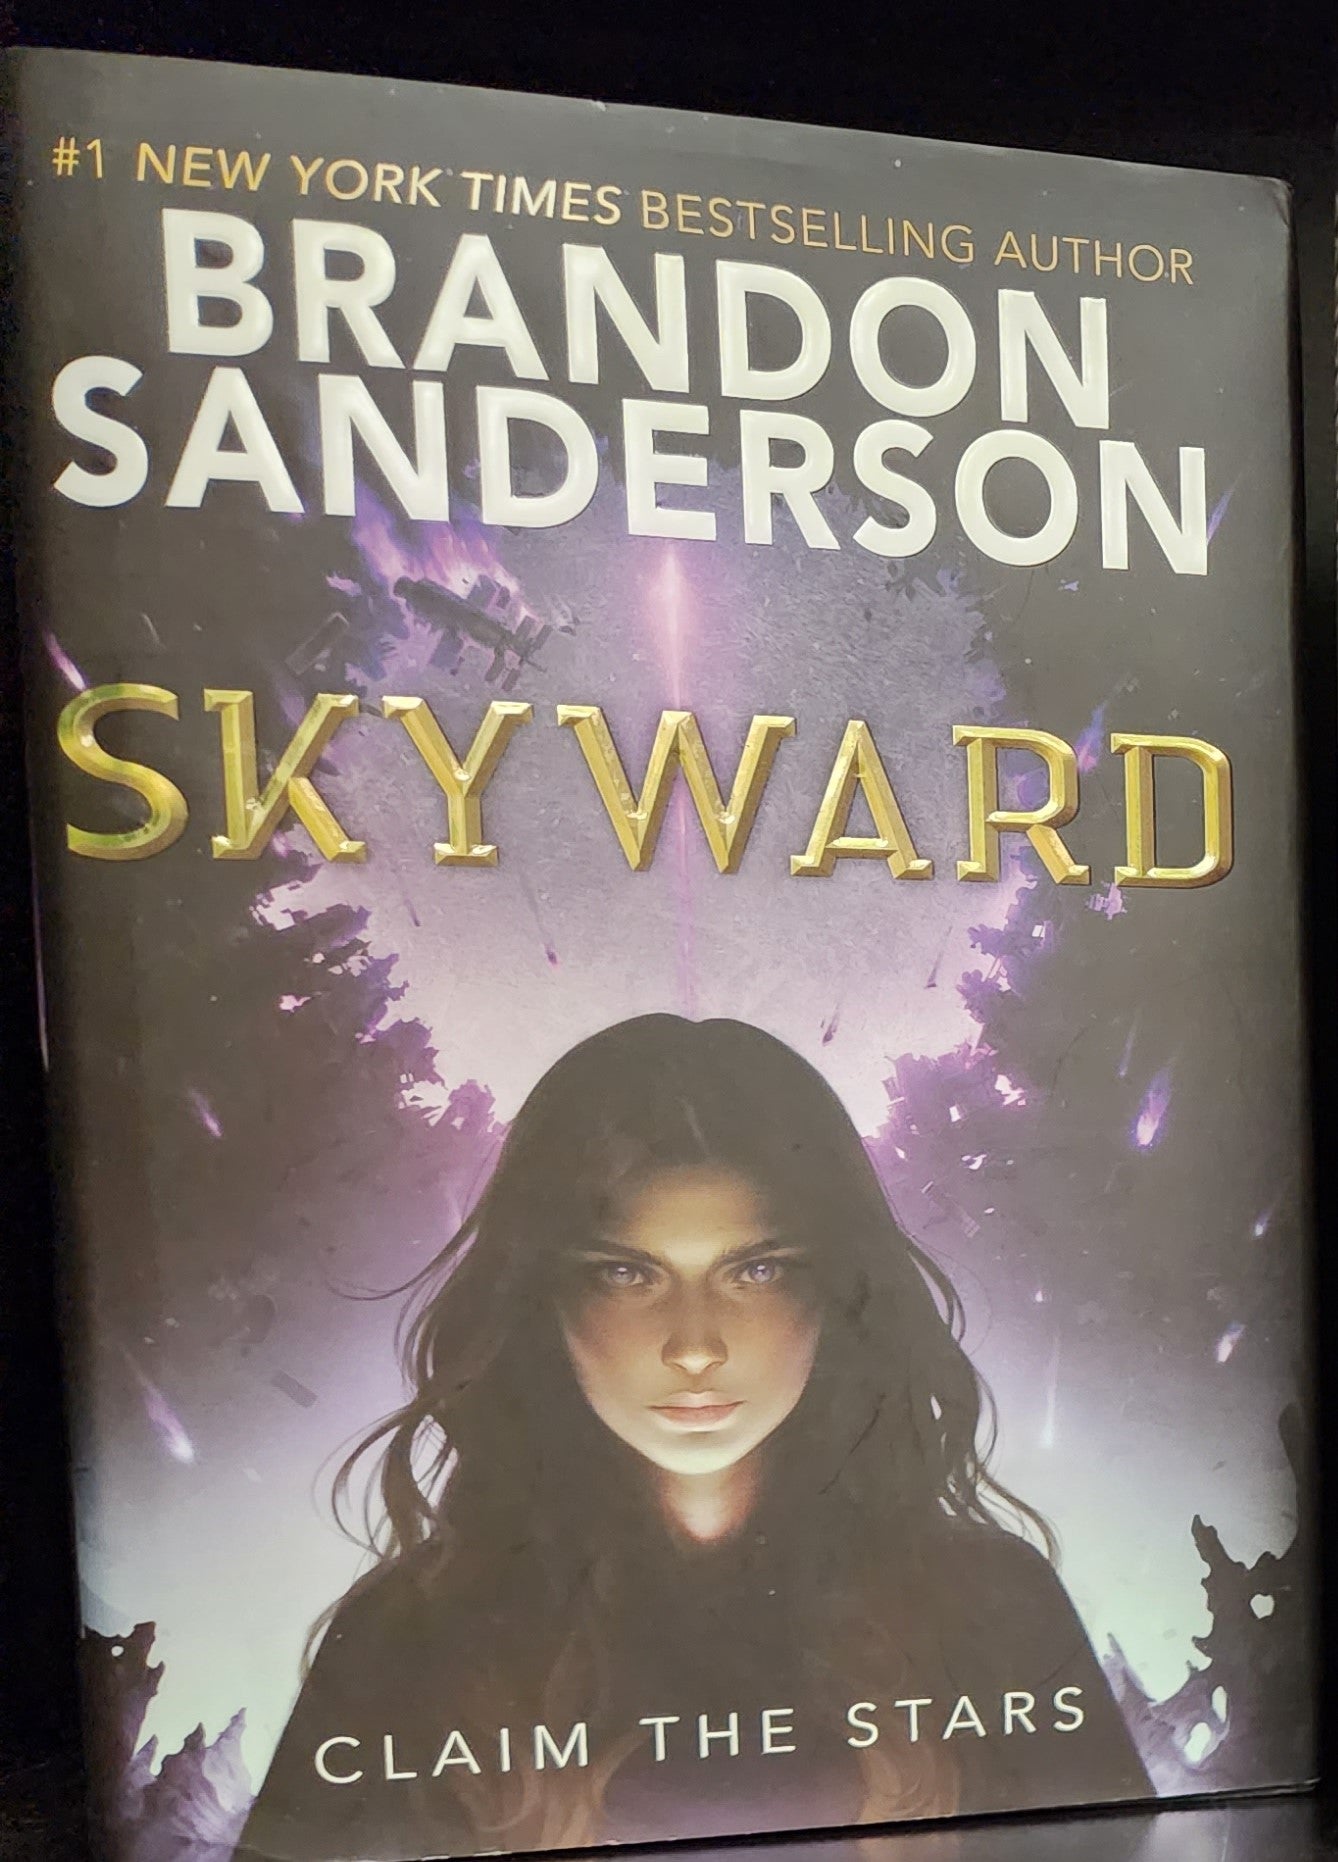 Starsight by Brandon Sanderson (Book 2 of Skyward series) Very